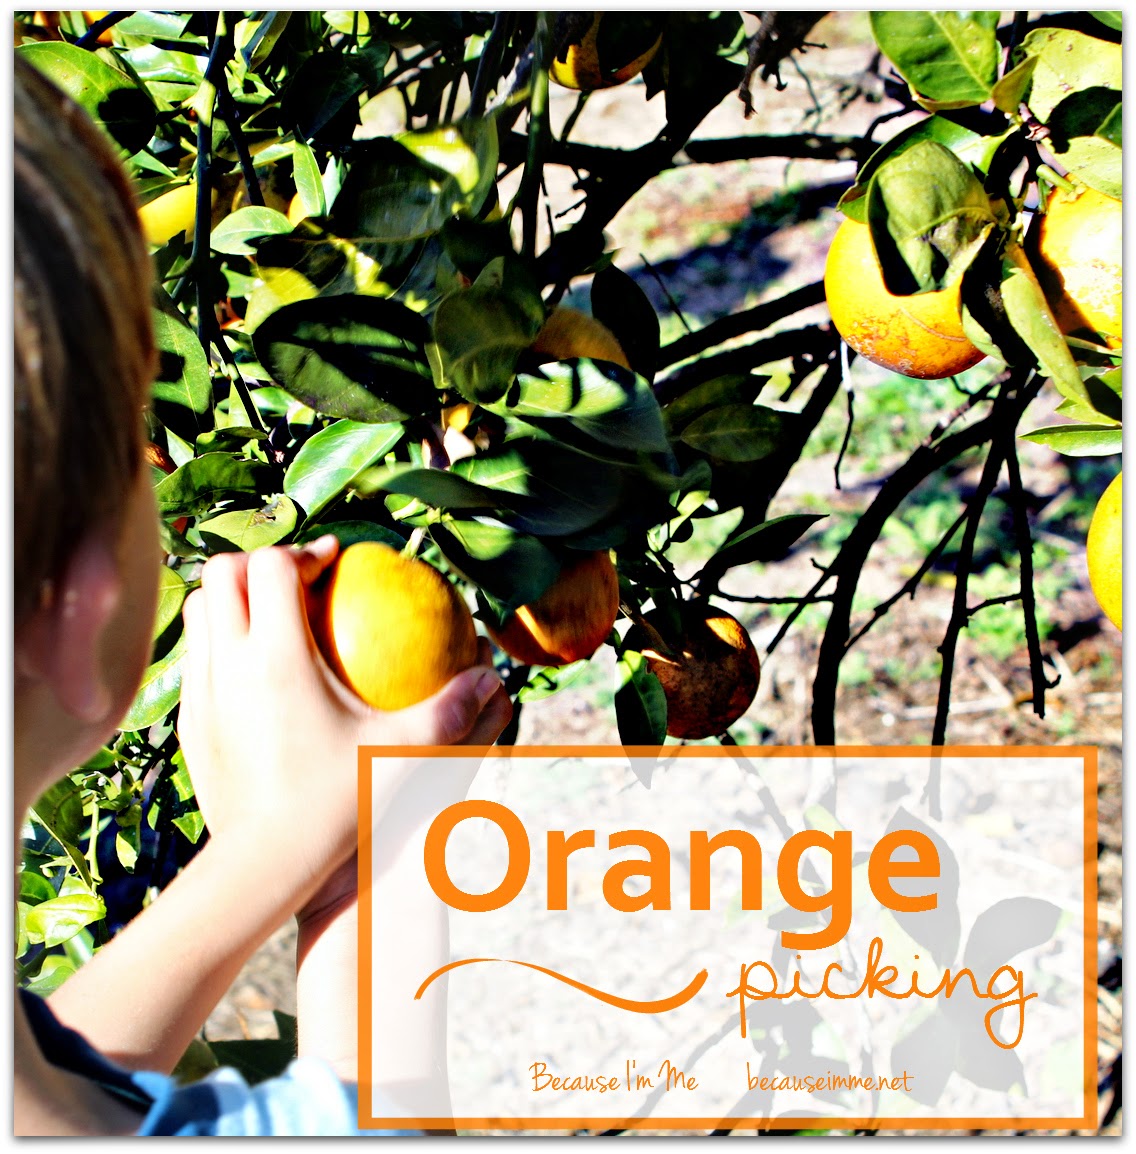 Orange picking in Southwest Florida